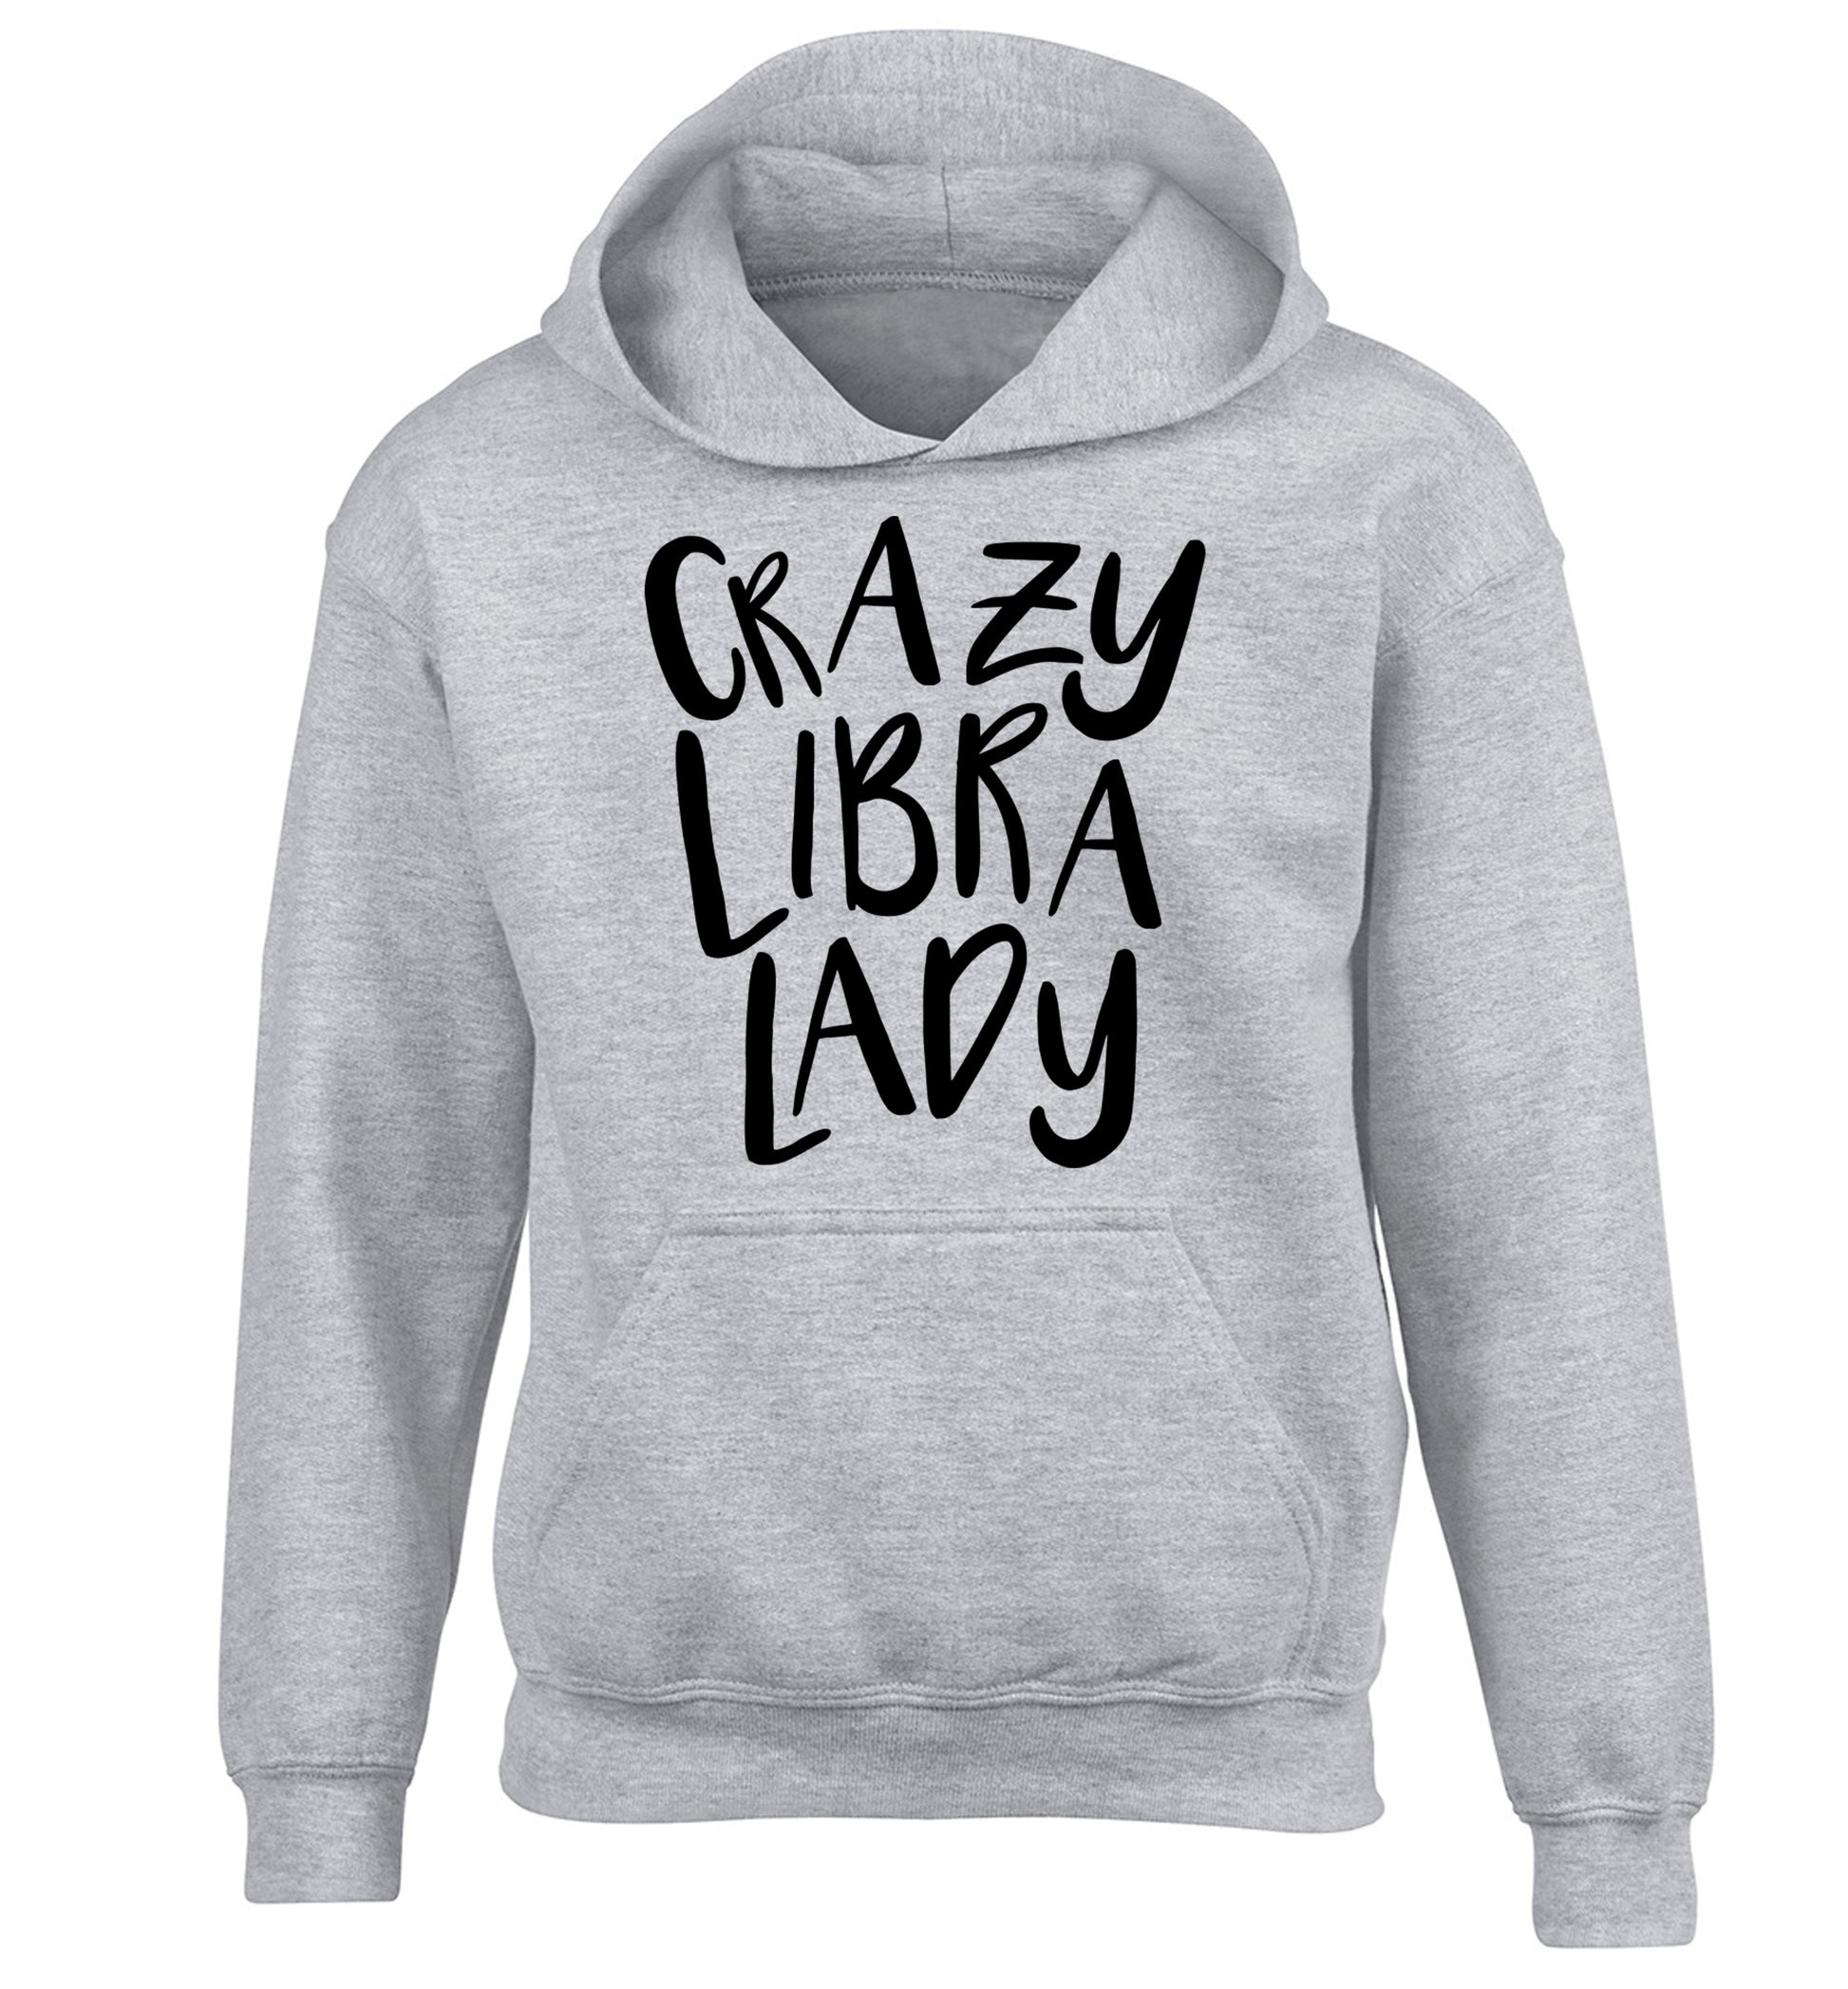 Crazy libra lady children's grey hoodie 12-13 Years